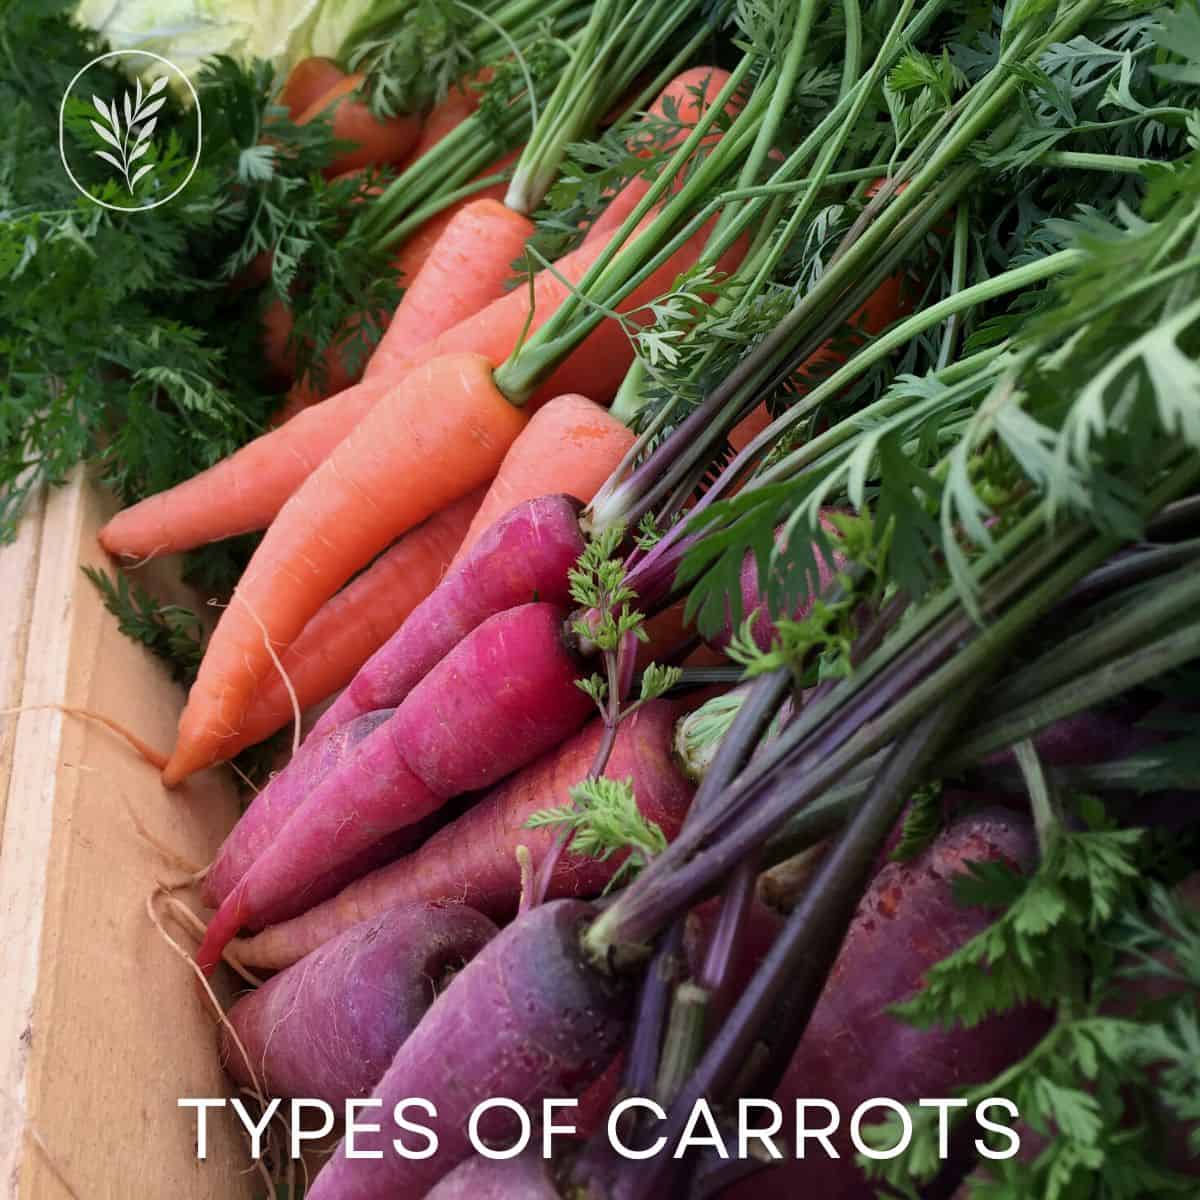 Types of carrots via @home4theharvest